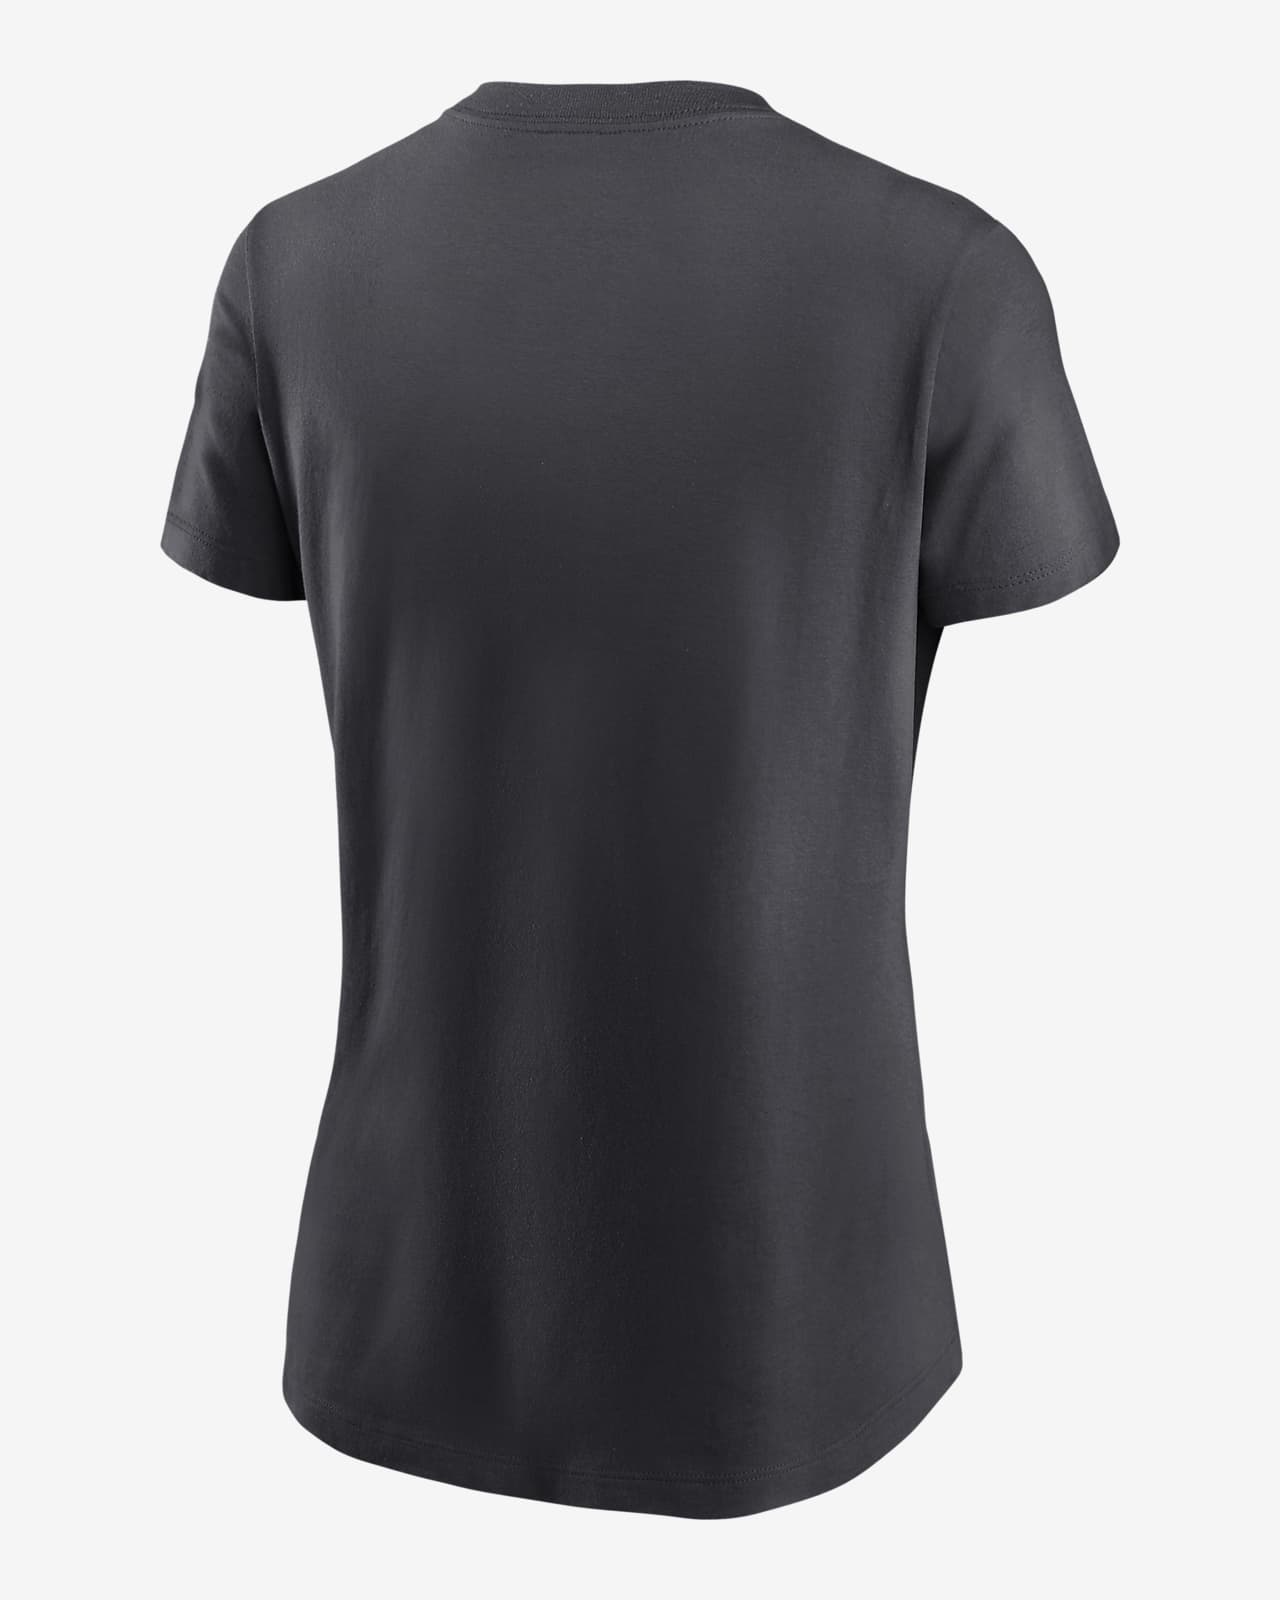 San Francisco 49ers Nike Dr-Fit Cotton Long Sleeve T-Shirt - Womens